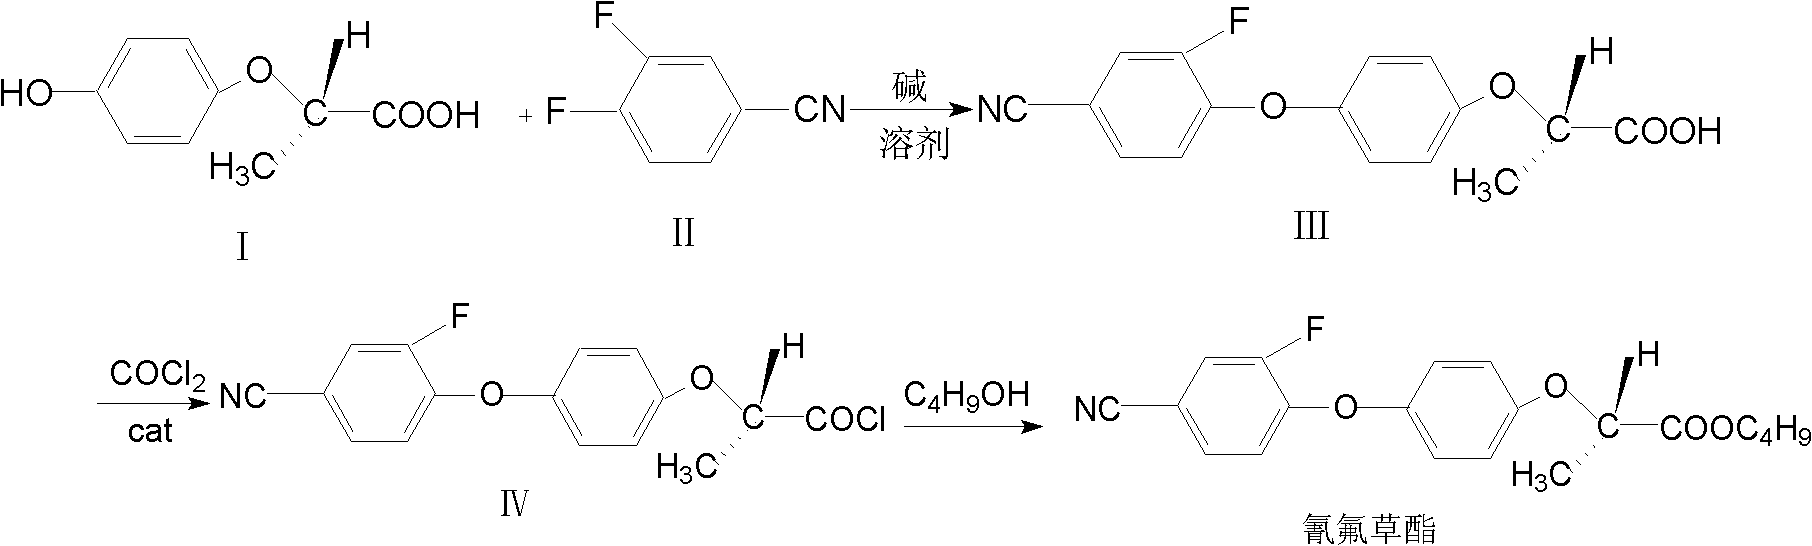 Synthetic method of cyhalofop-butyl active compound